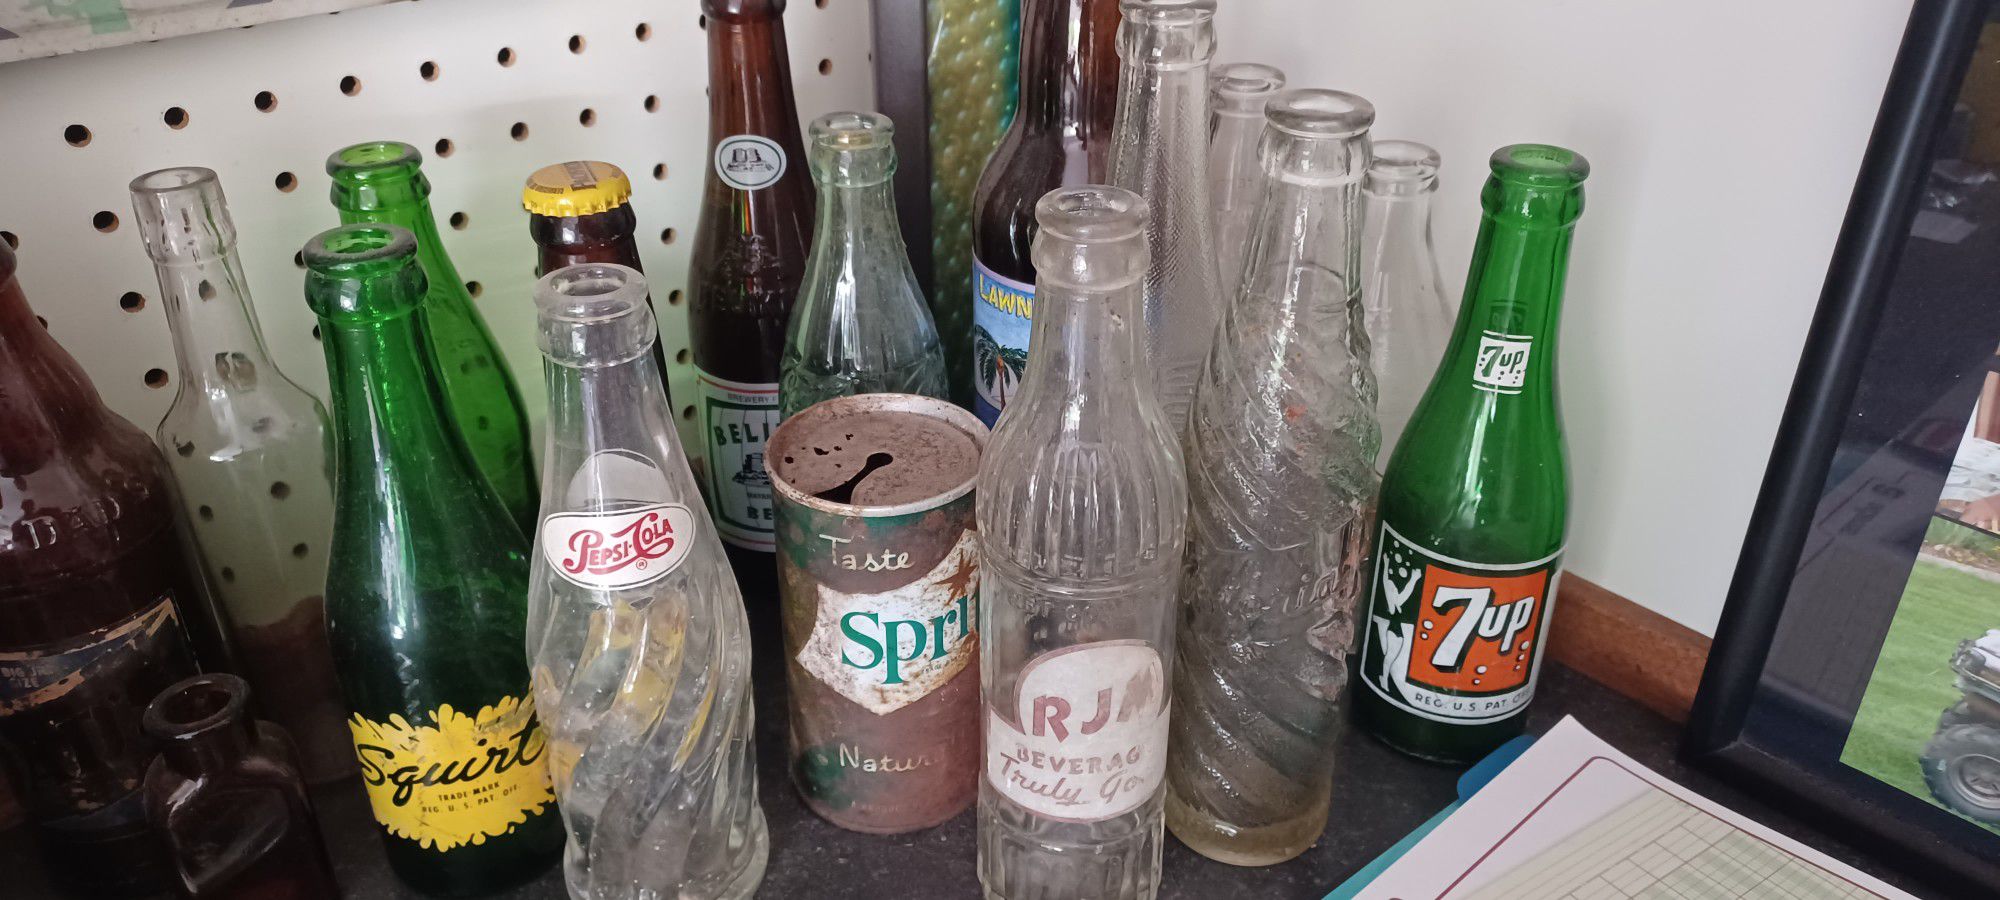 Vintage Soda Bottles $5 To $10 Each